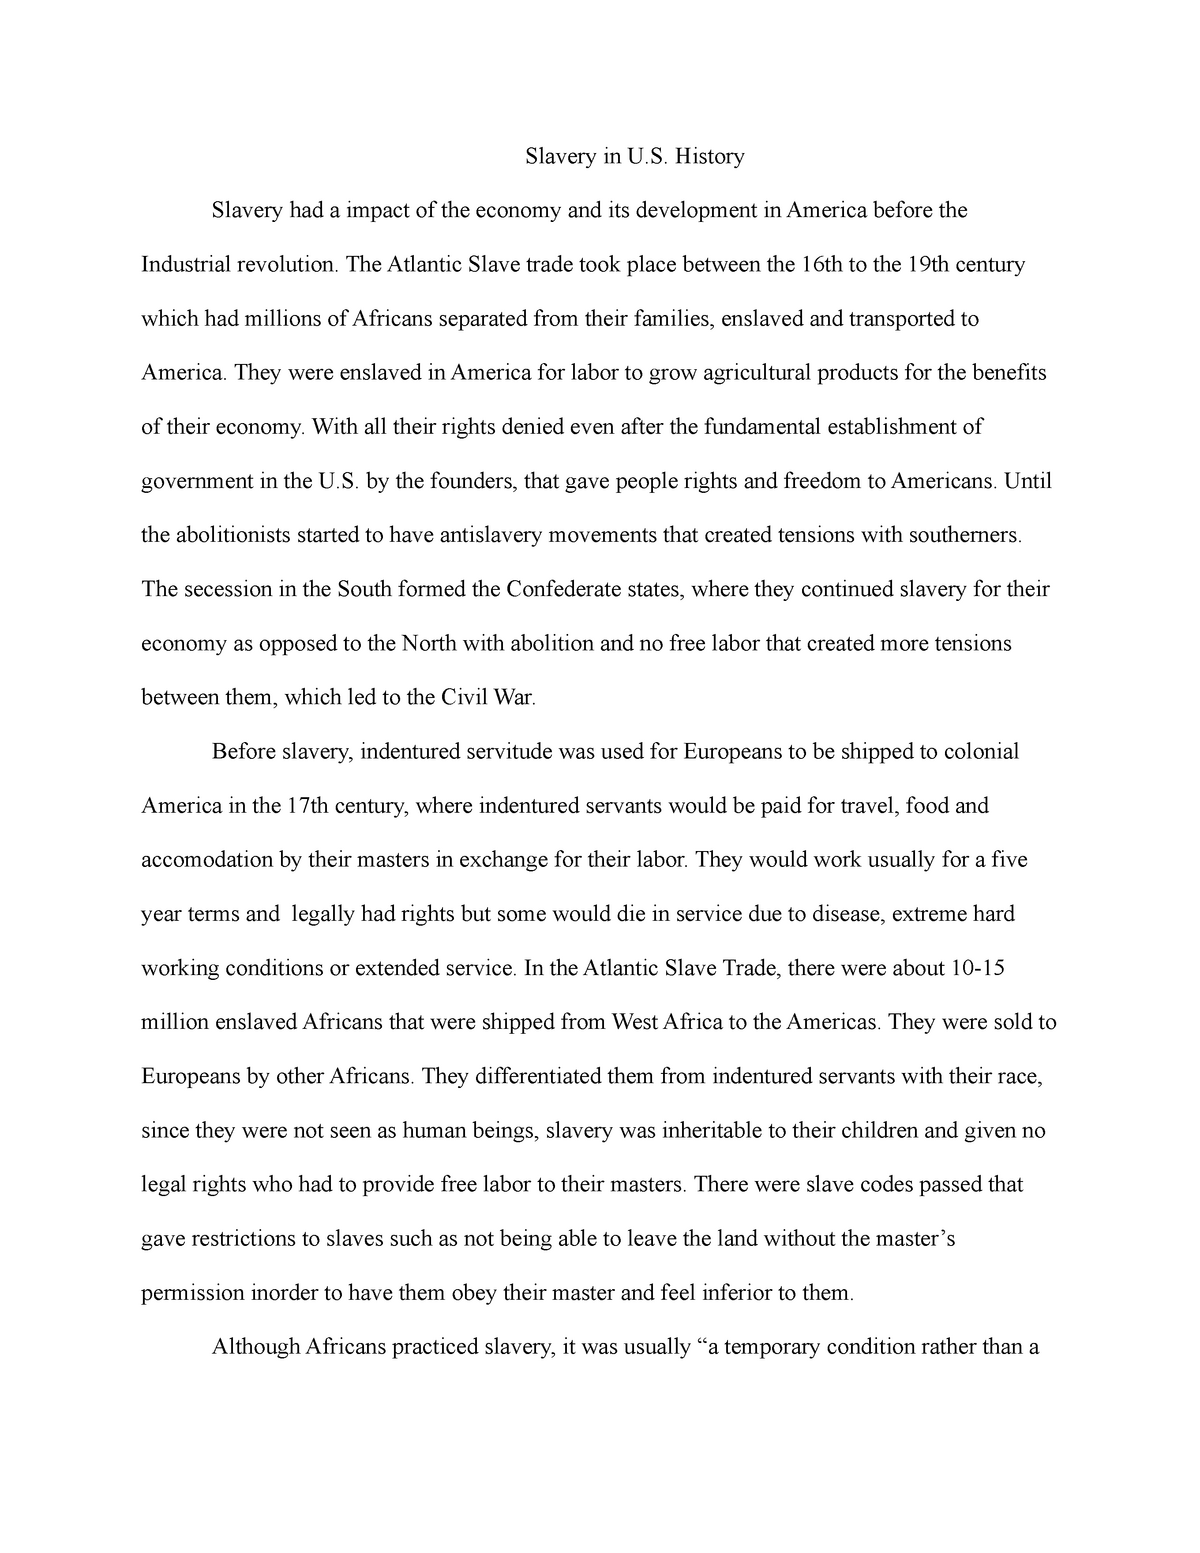 slavery essay introduction